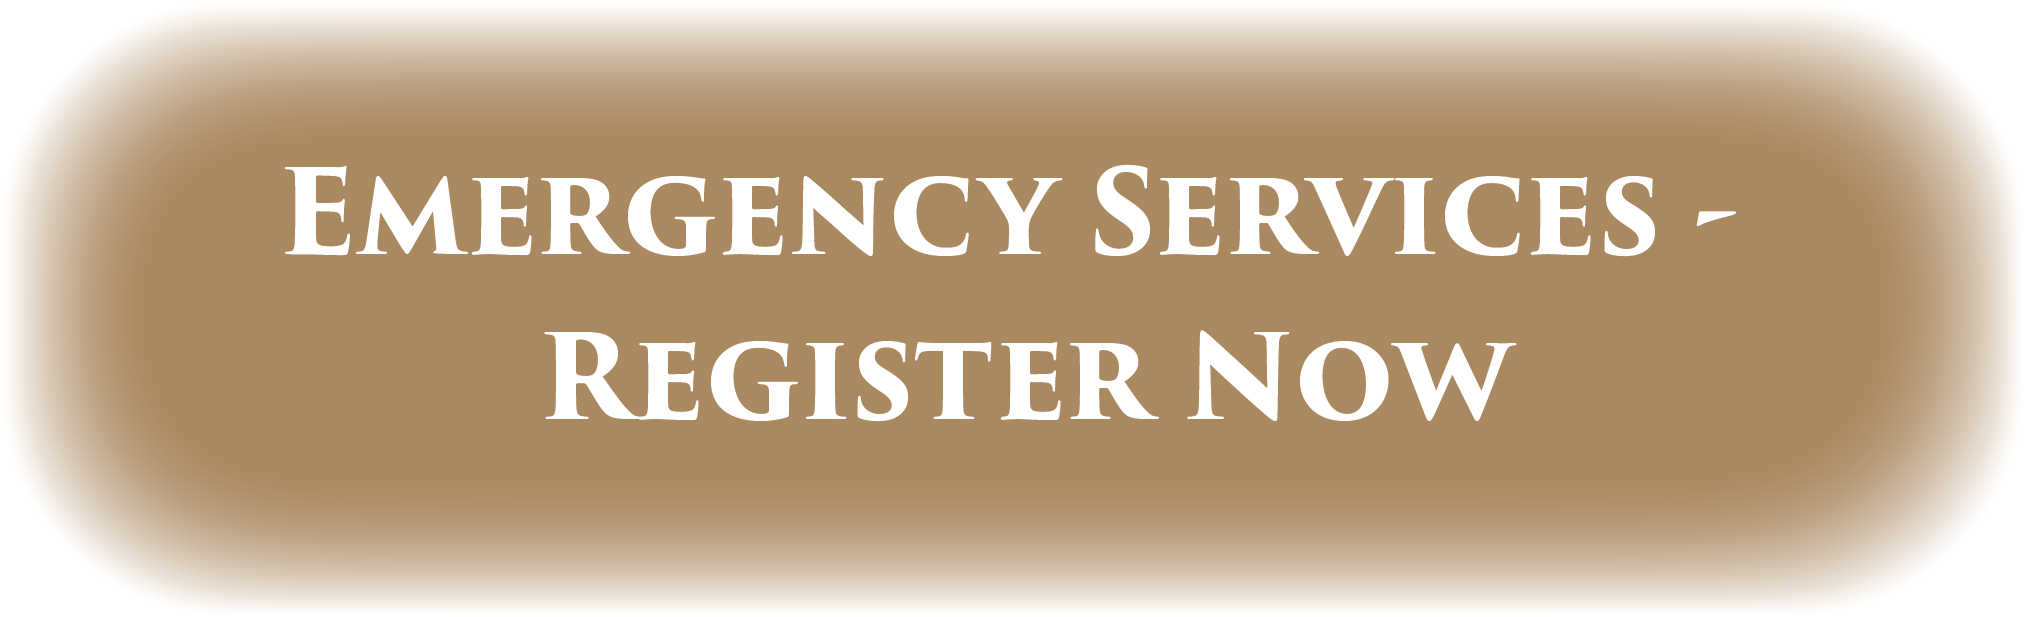 Emergency Services Registration Form